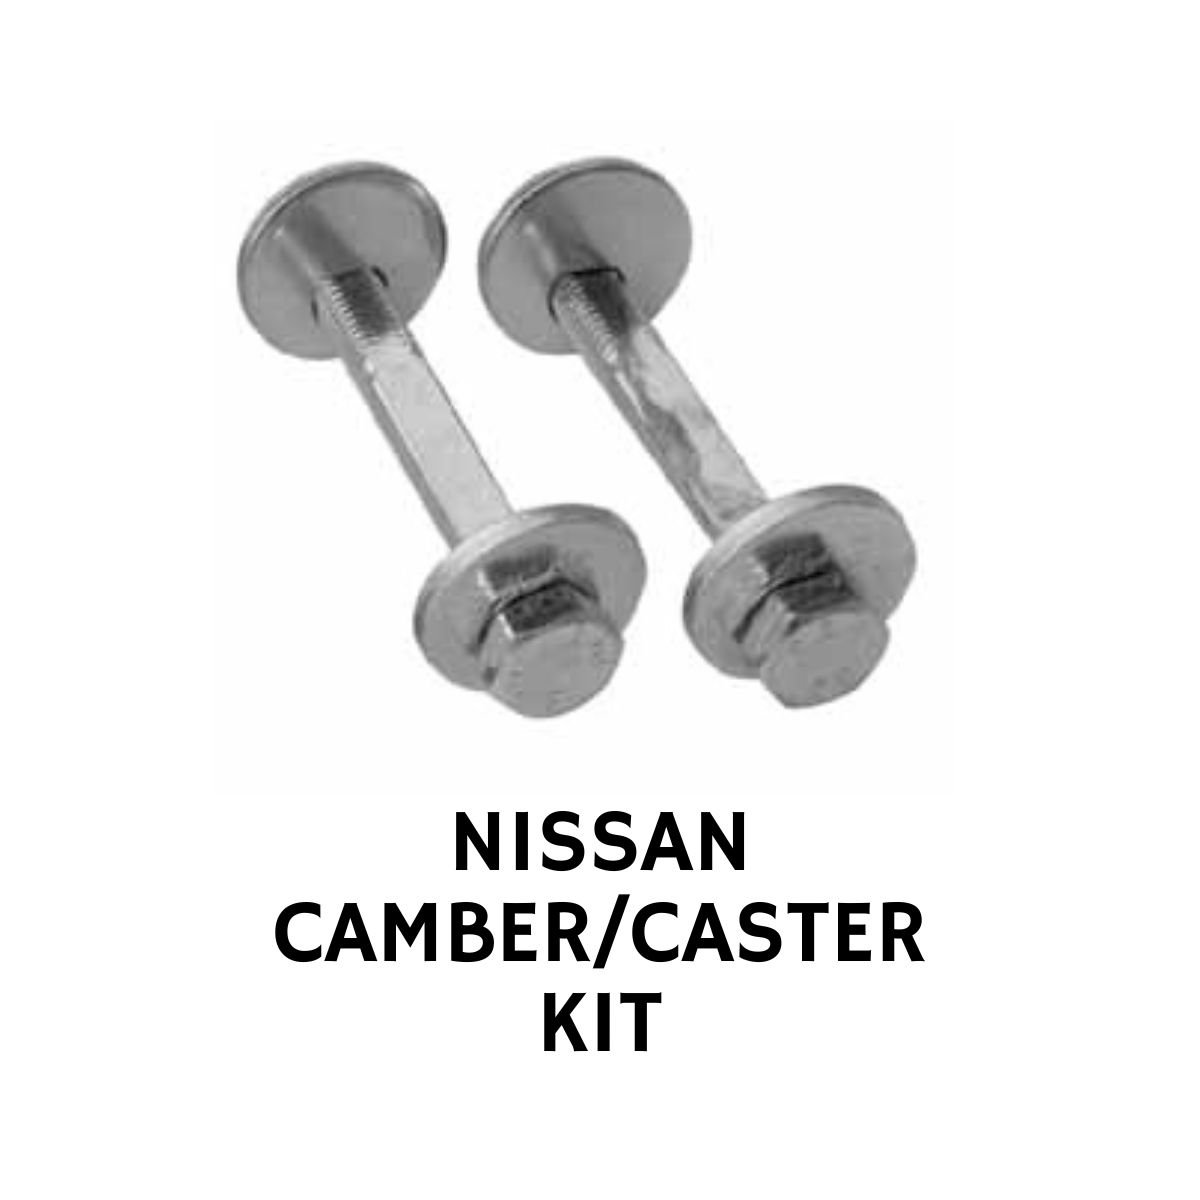 NISSAN CAMBER/CASTER KIT